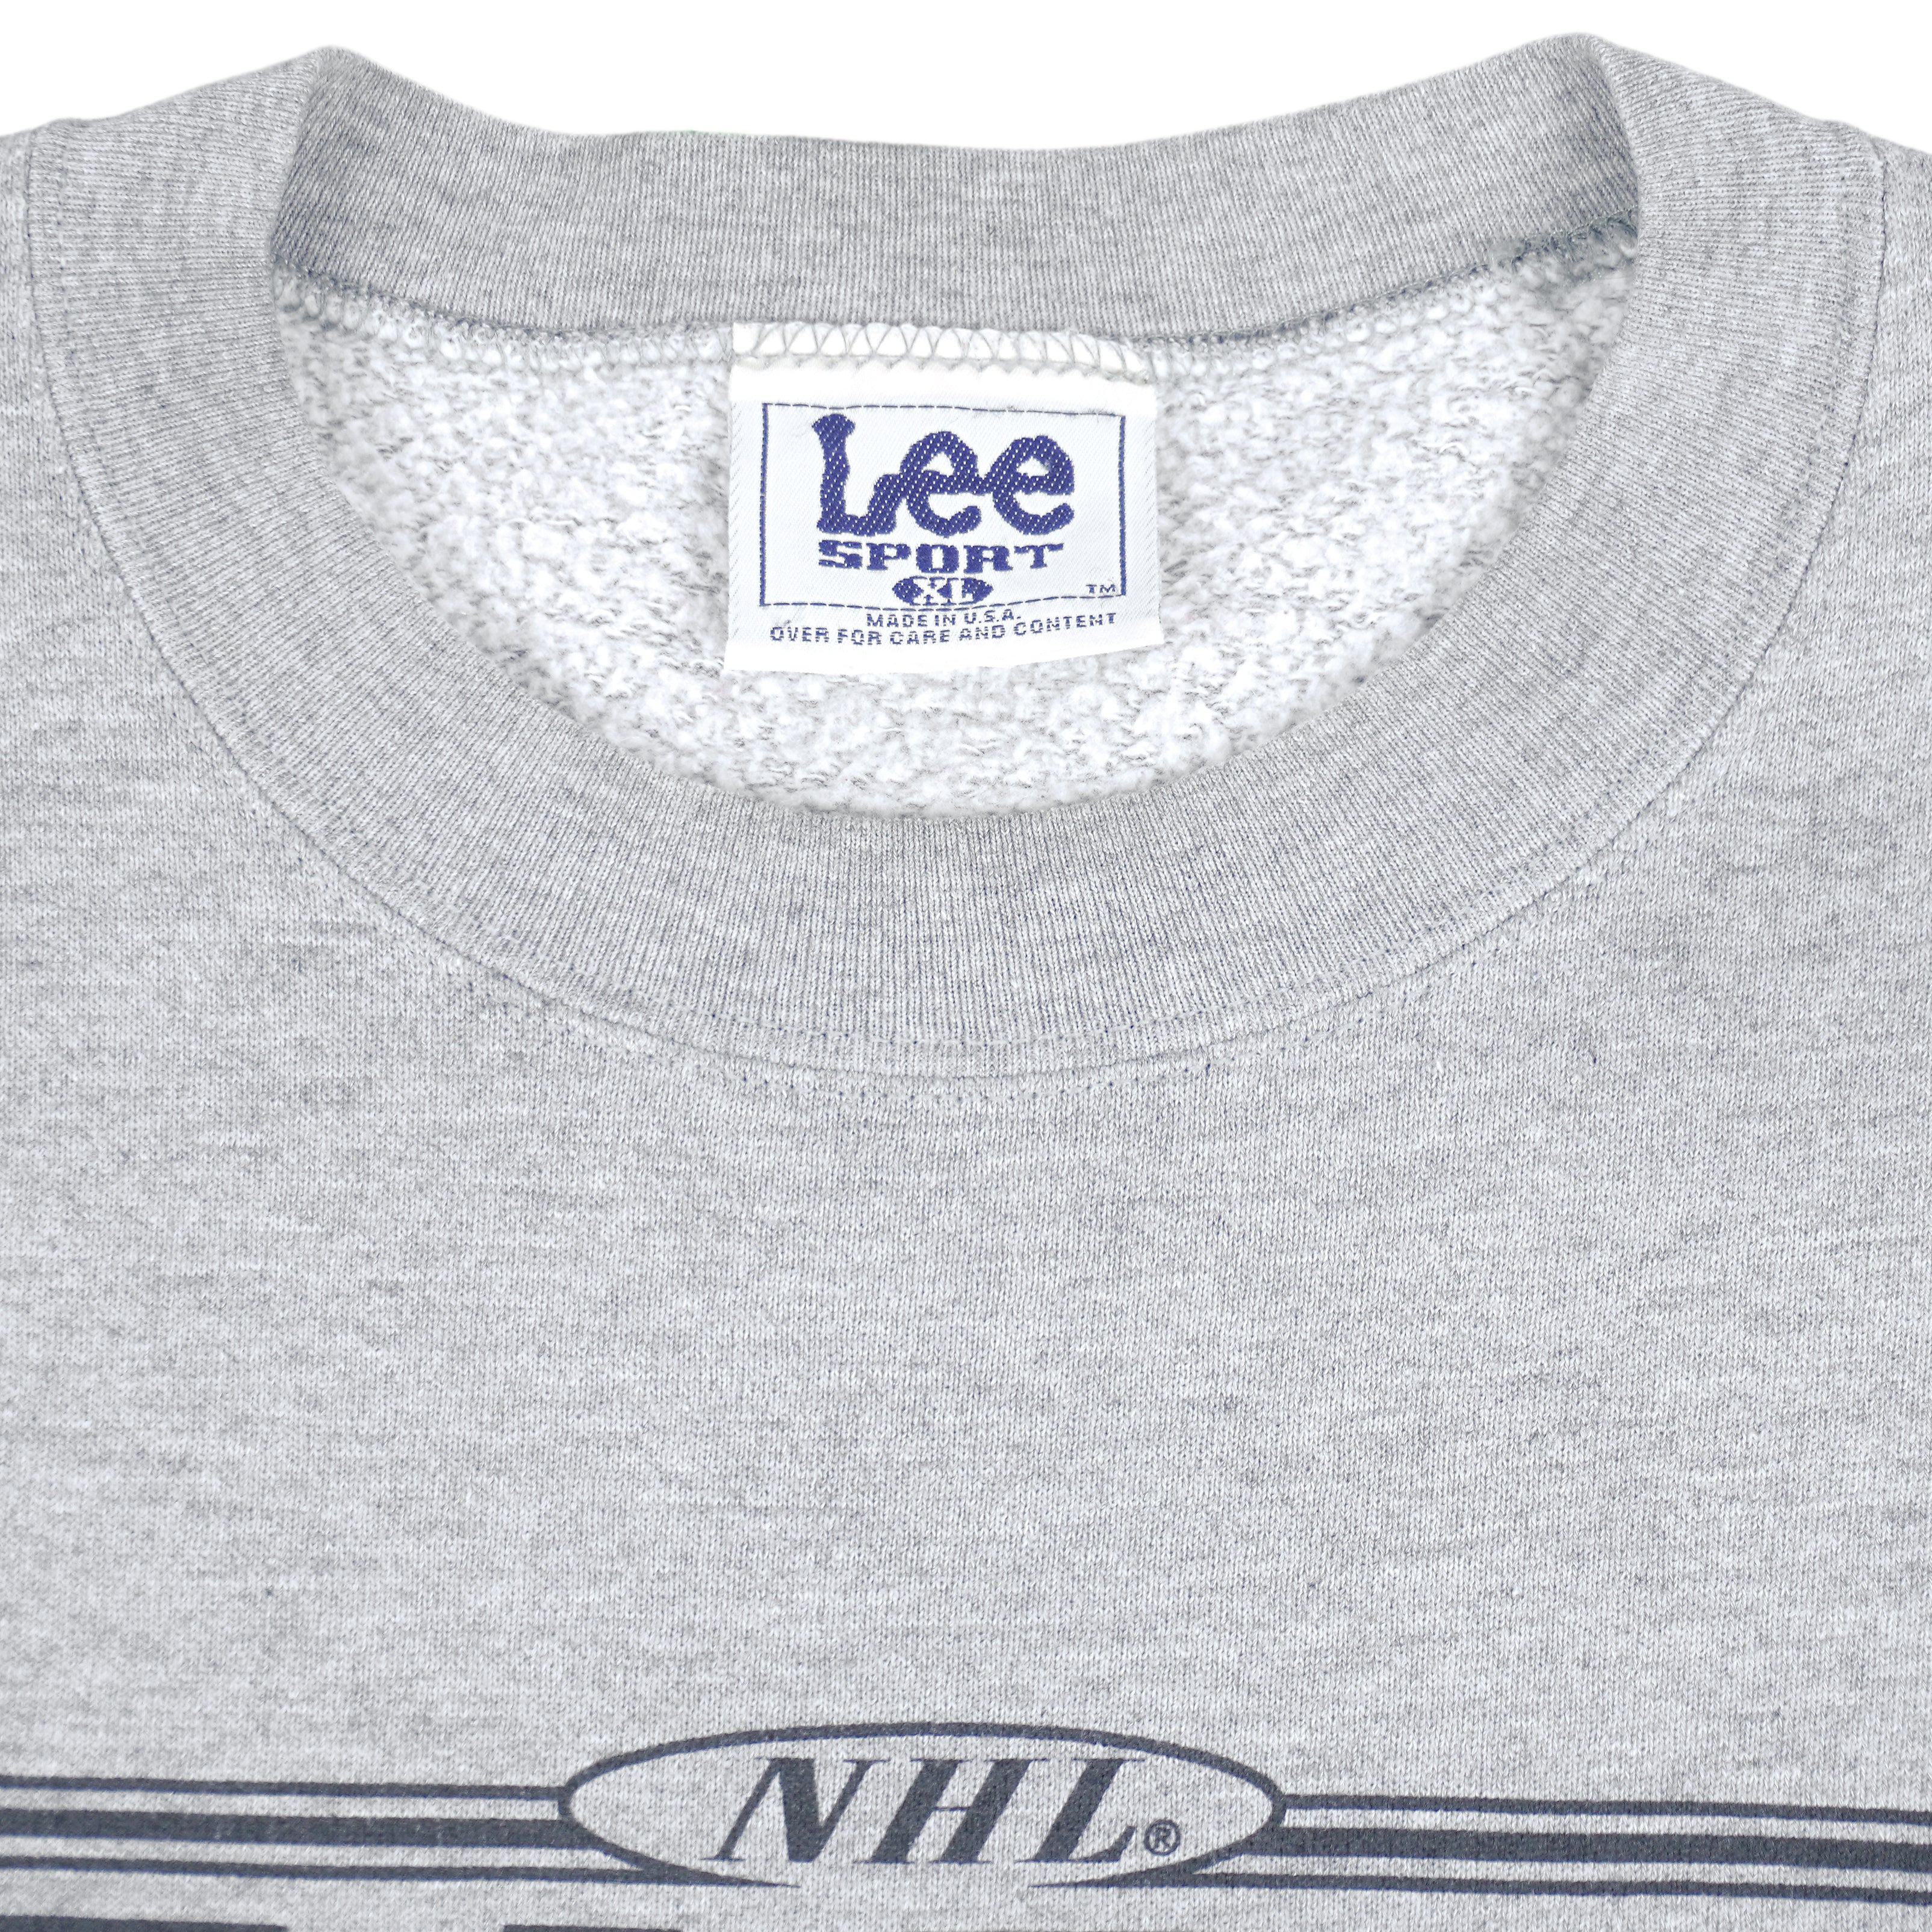 Vintage Nashville Predators Sweatshirt Size Large. Lee